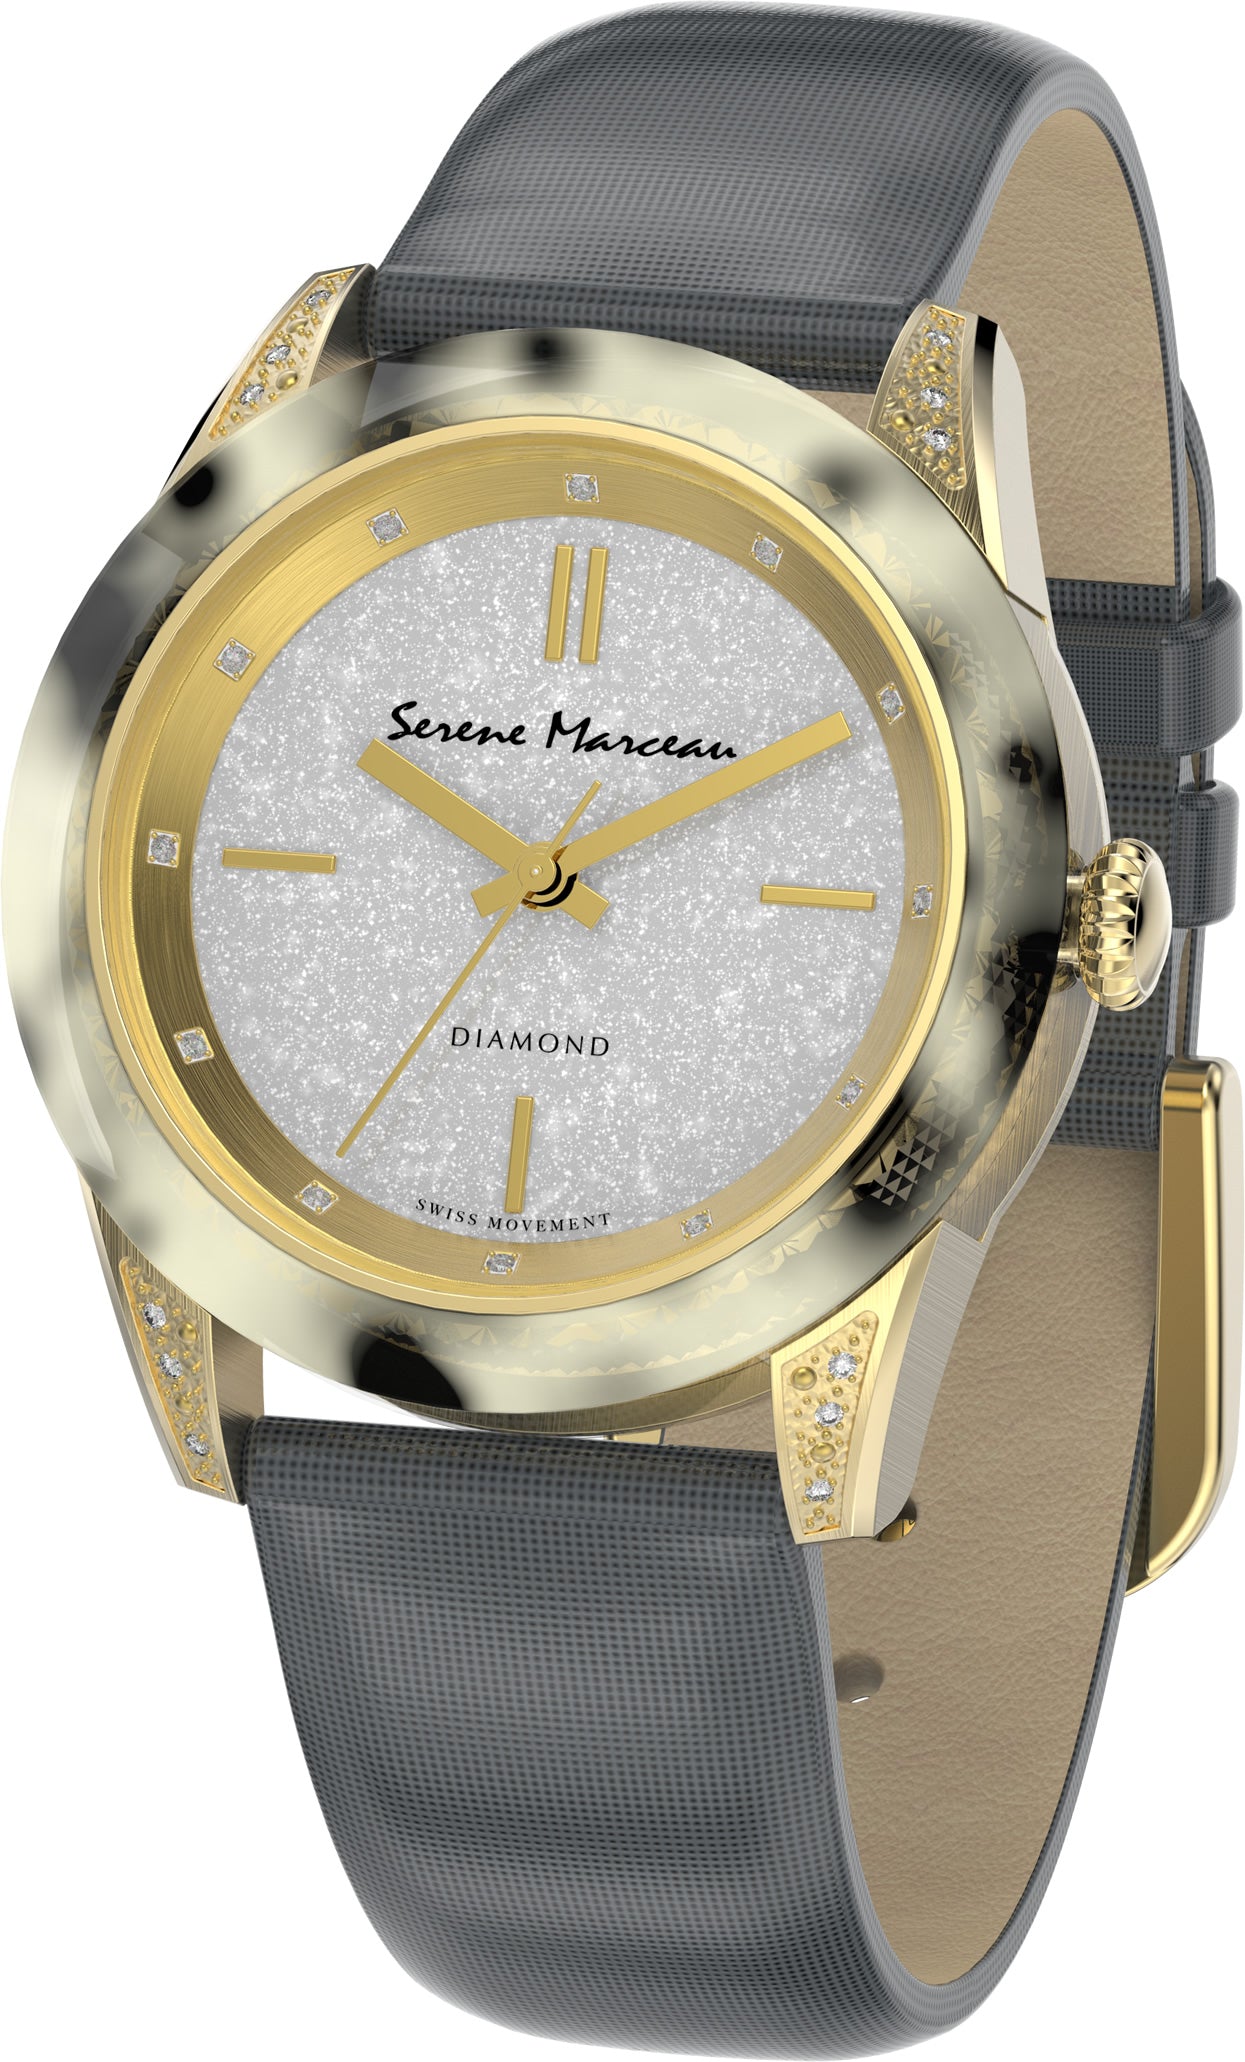 SERENE MARCEAU S002.08 PIGALLE 38mm Silver-tone dial Ladies Diamond watch 😉